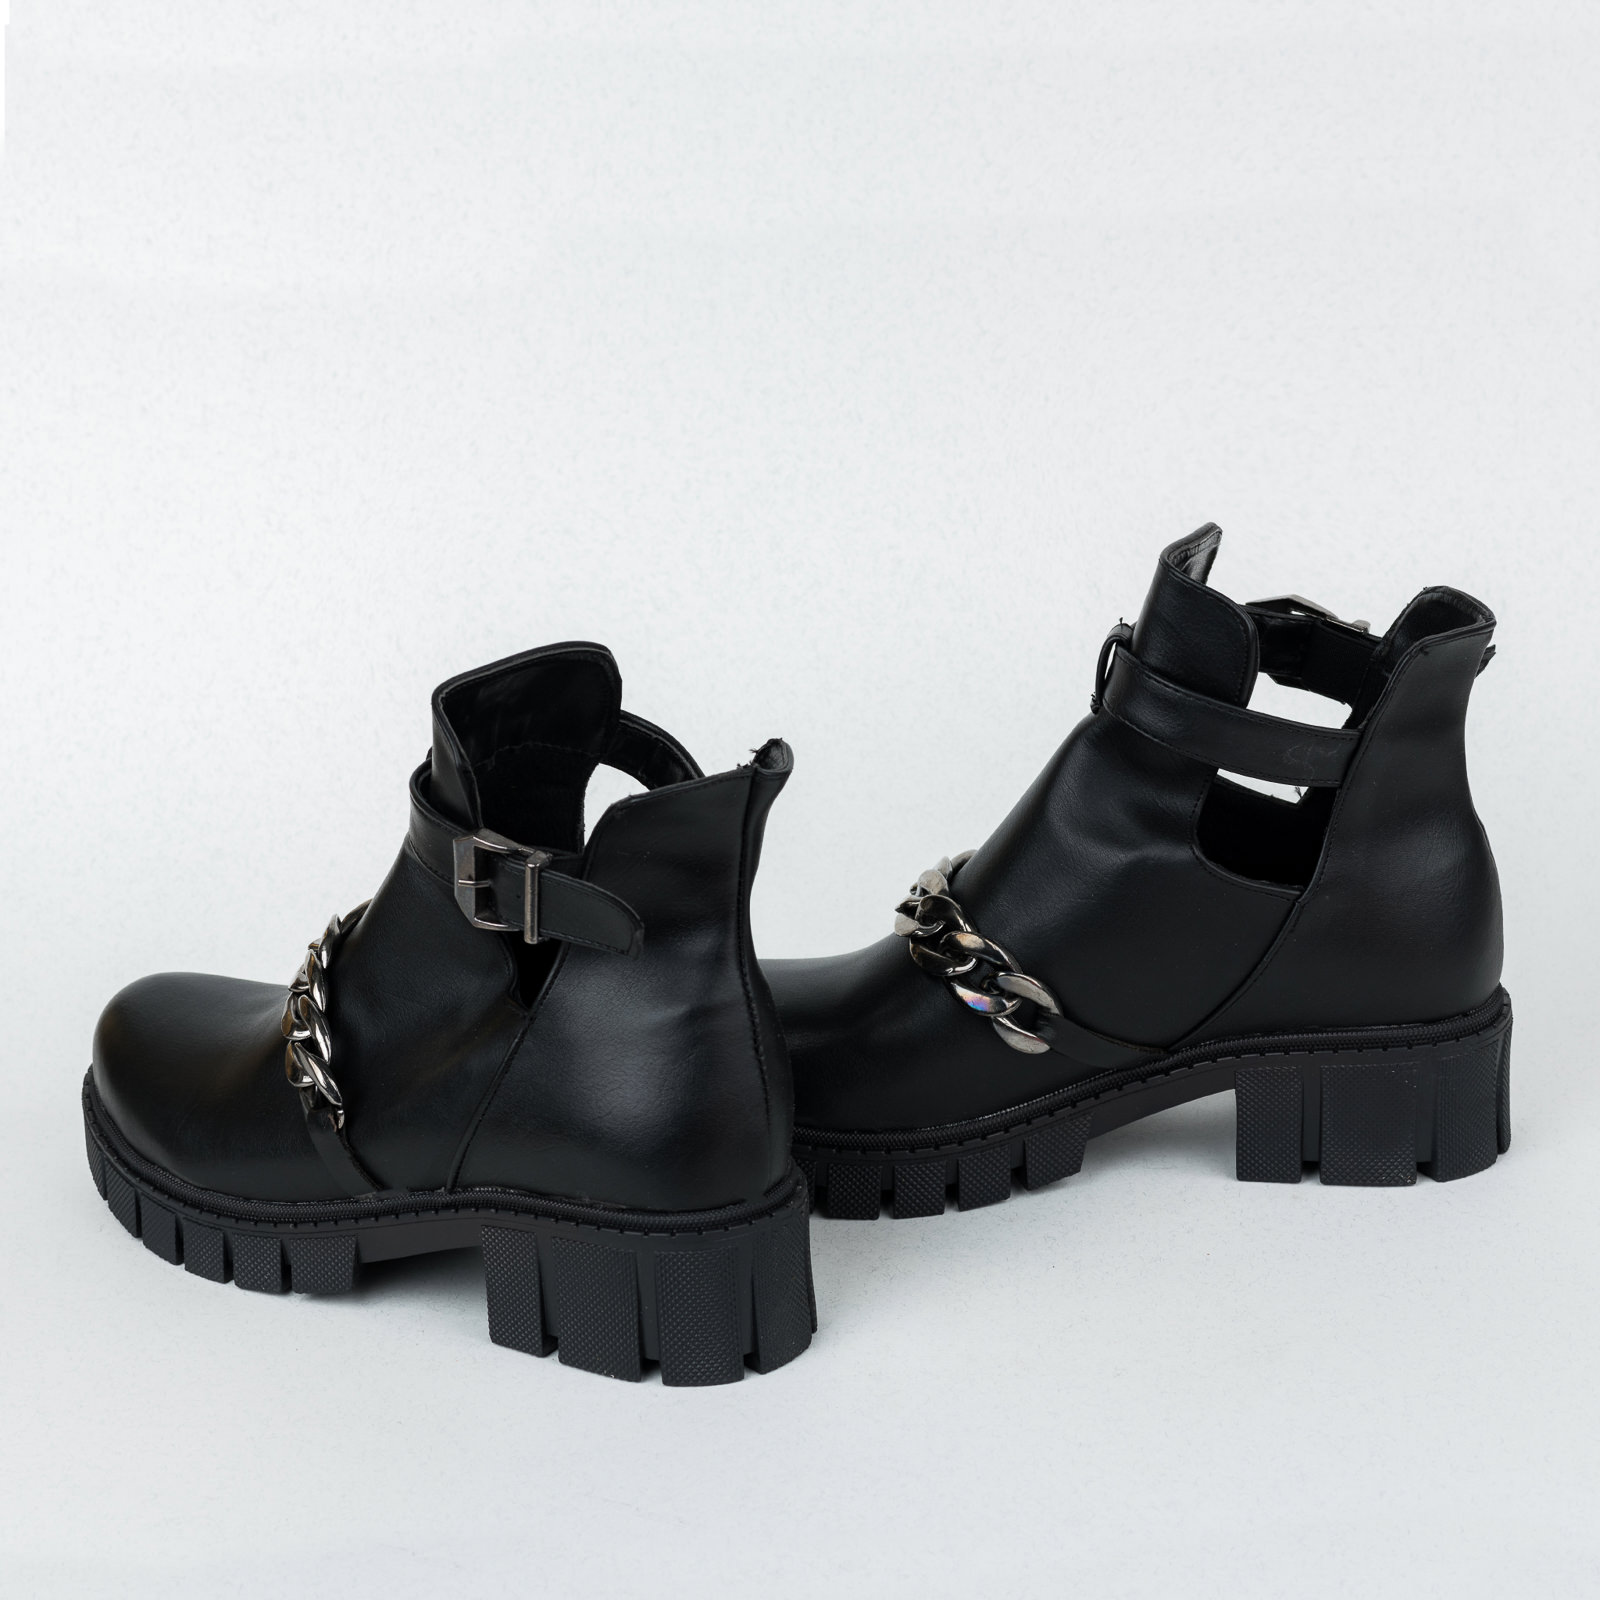 Women ankle boots B476 - BLACK